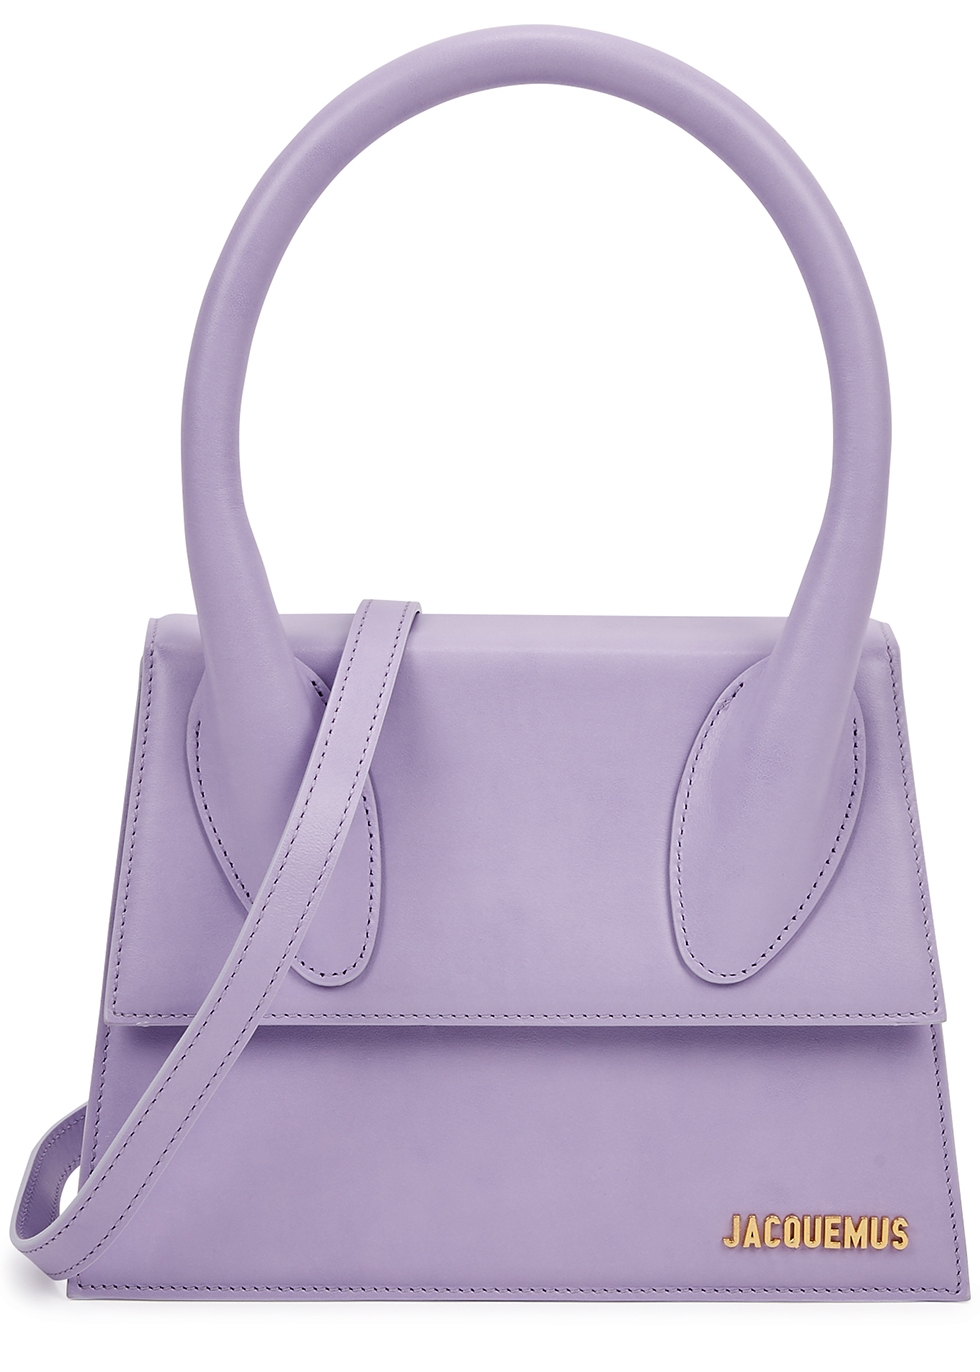 Jacquemus Le Grande Chiquito lilac leather top handle bag